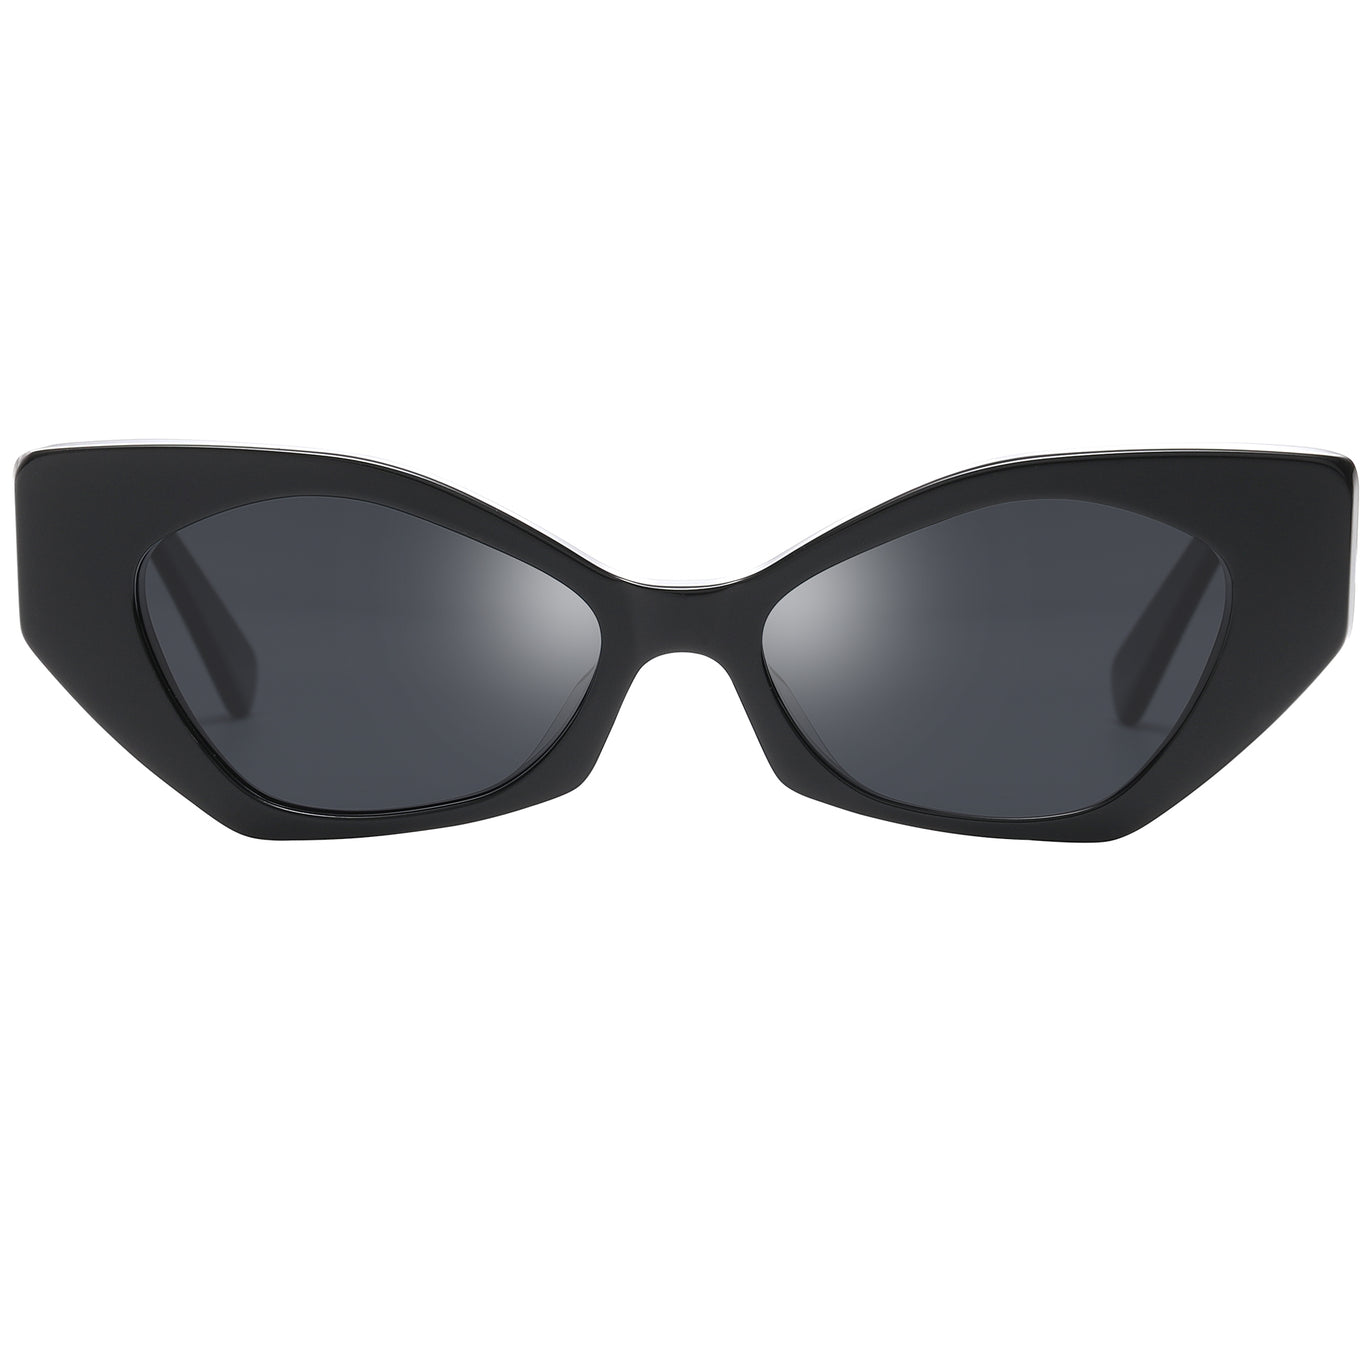 DUCO Classic Semi Rimless Sun Glasses #retro #shades #acetate